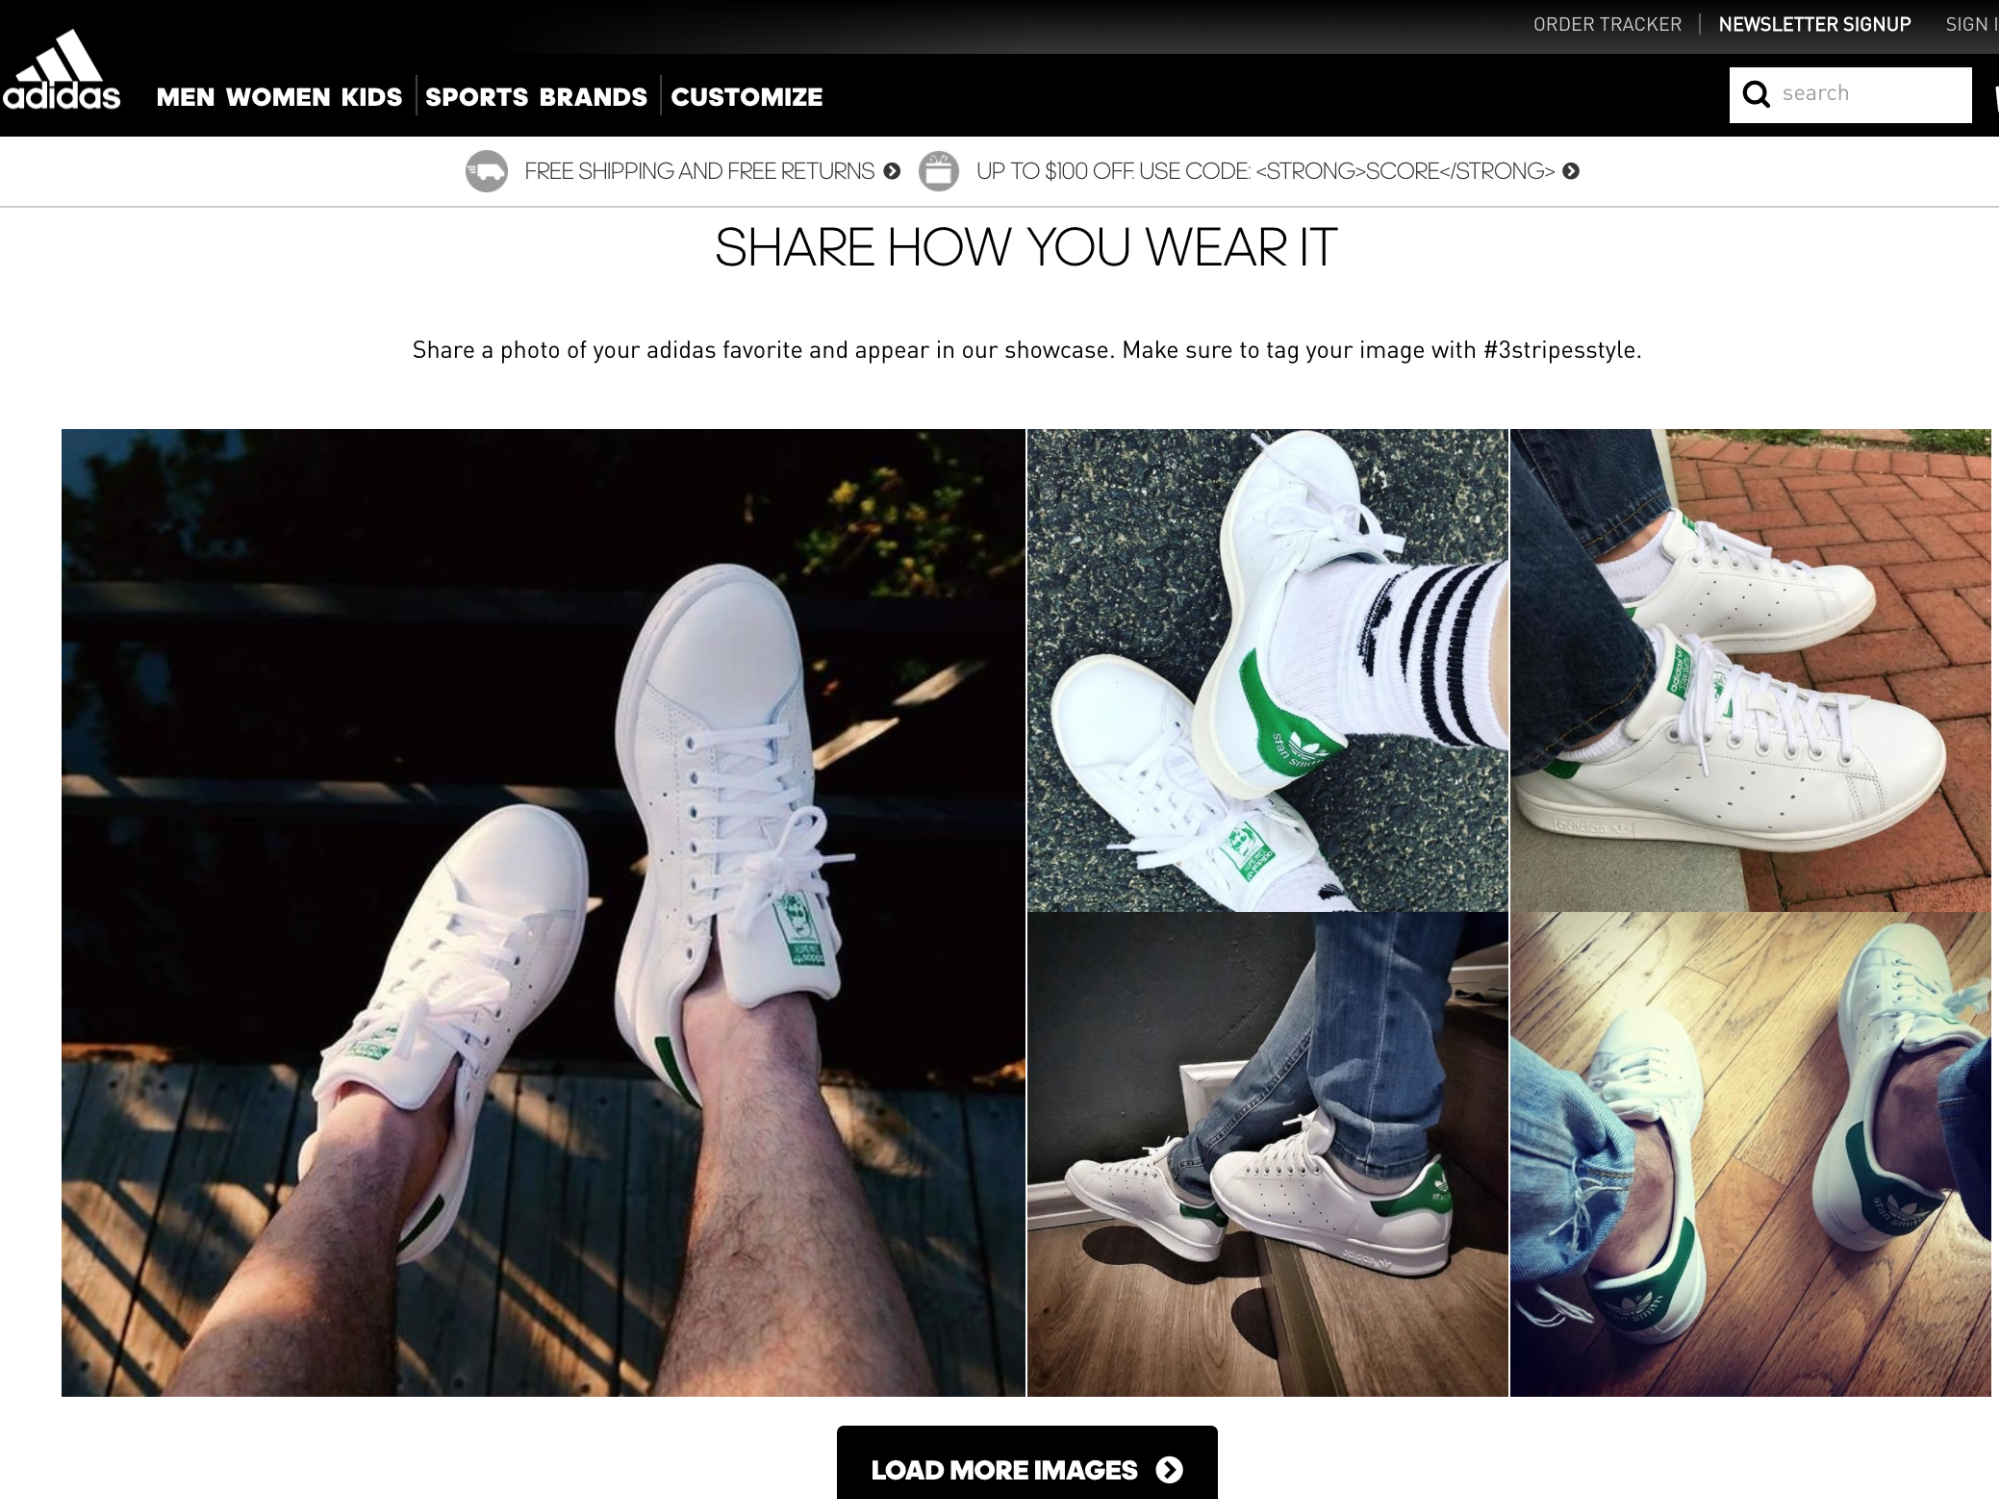 Screenshot showing a page on adidas.com